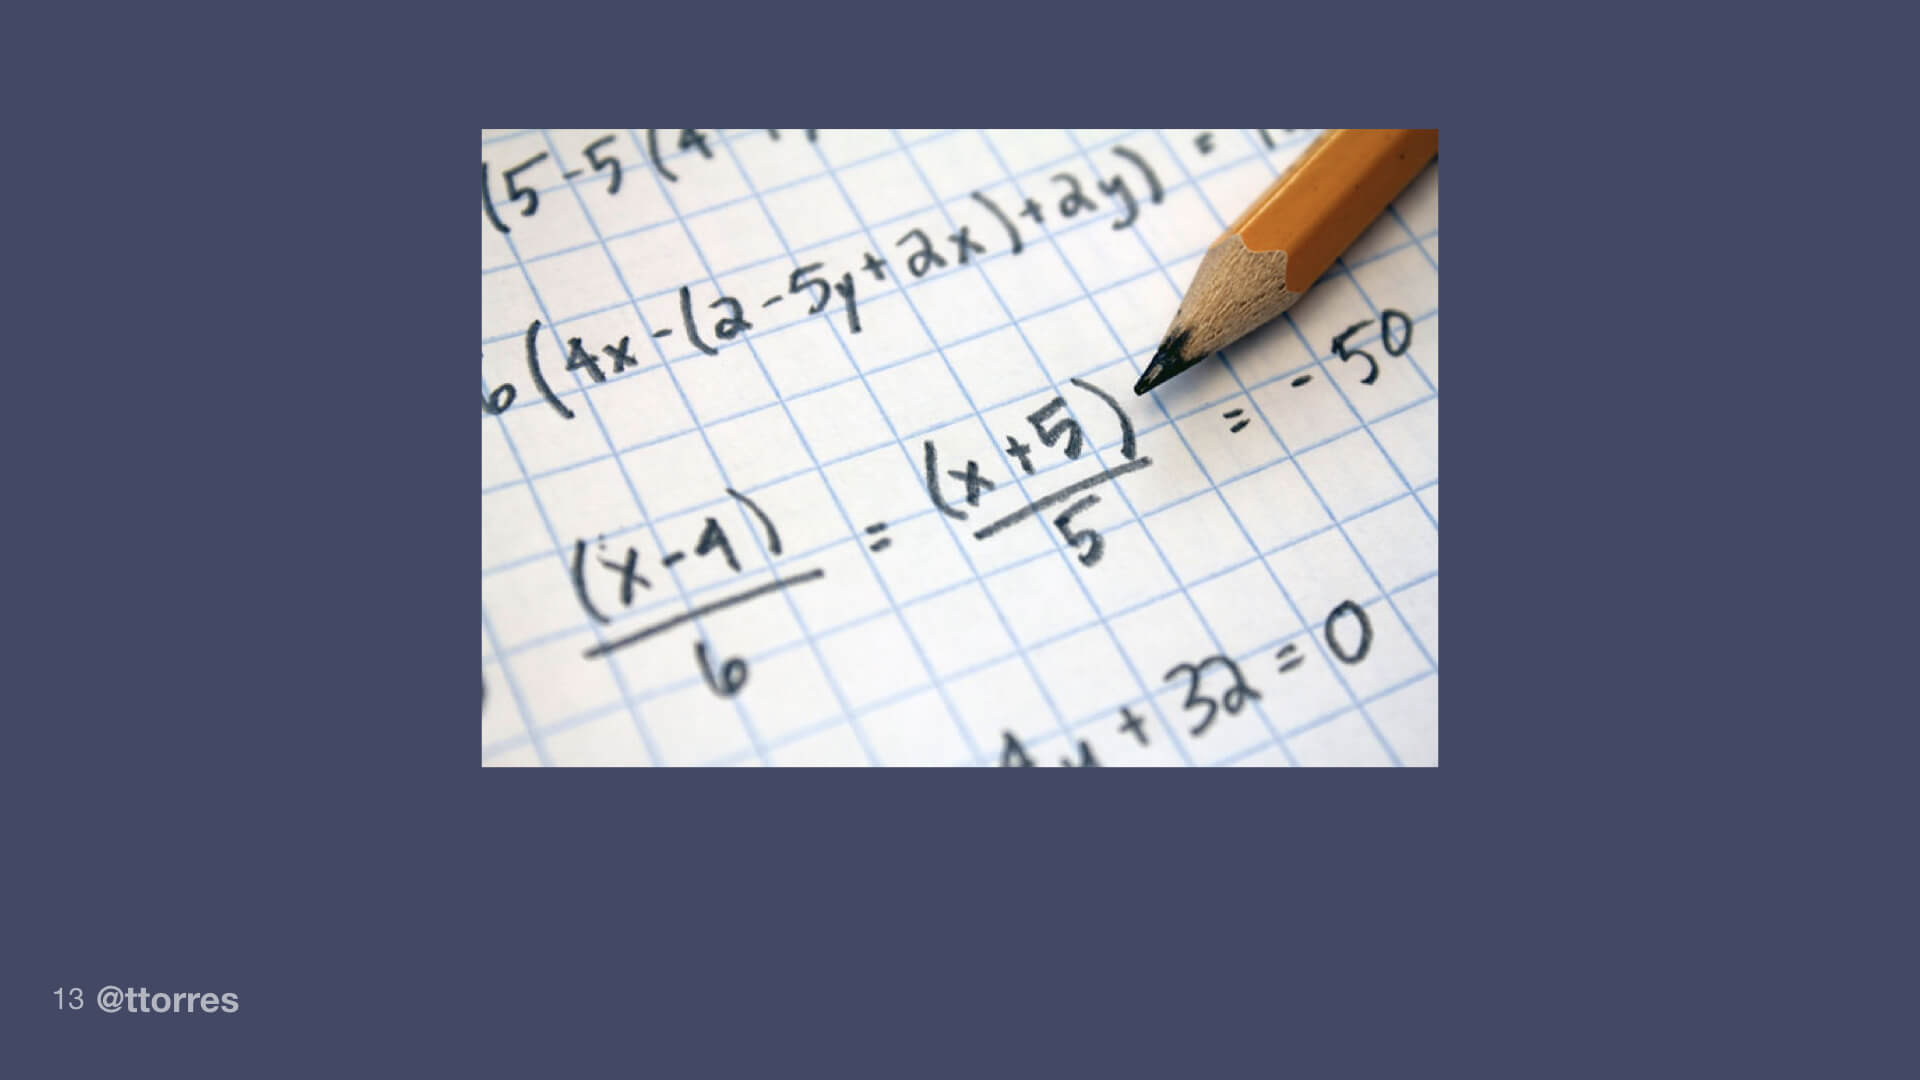 A handwritten algebra equation on a piece of graph paper.